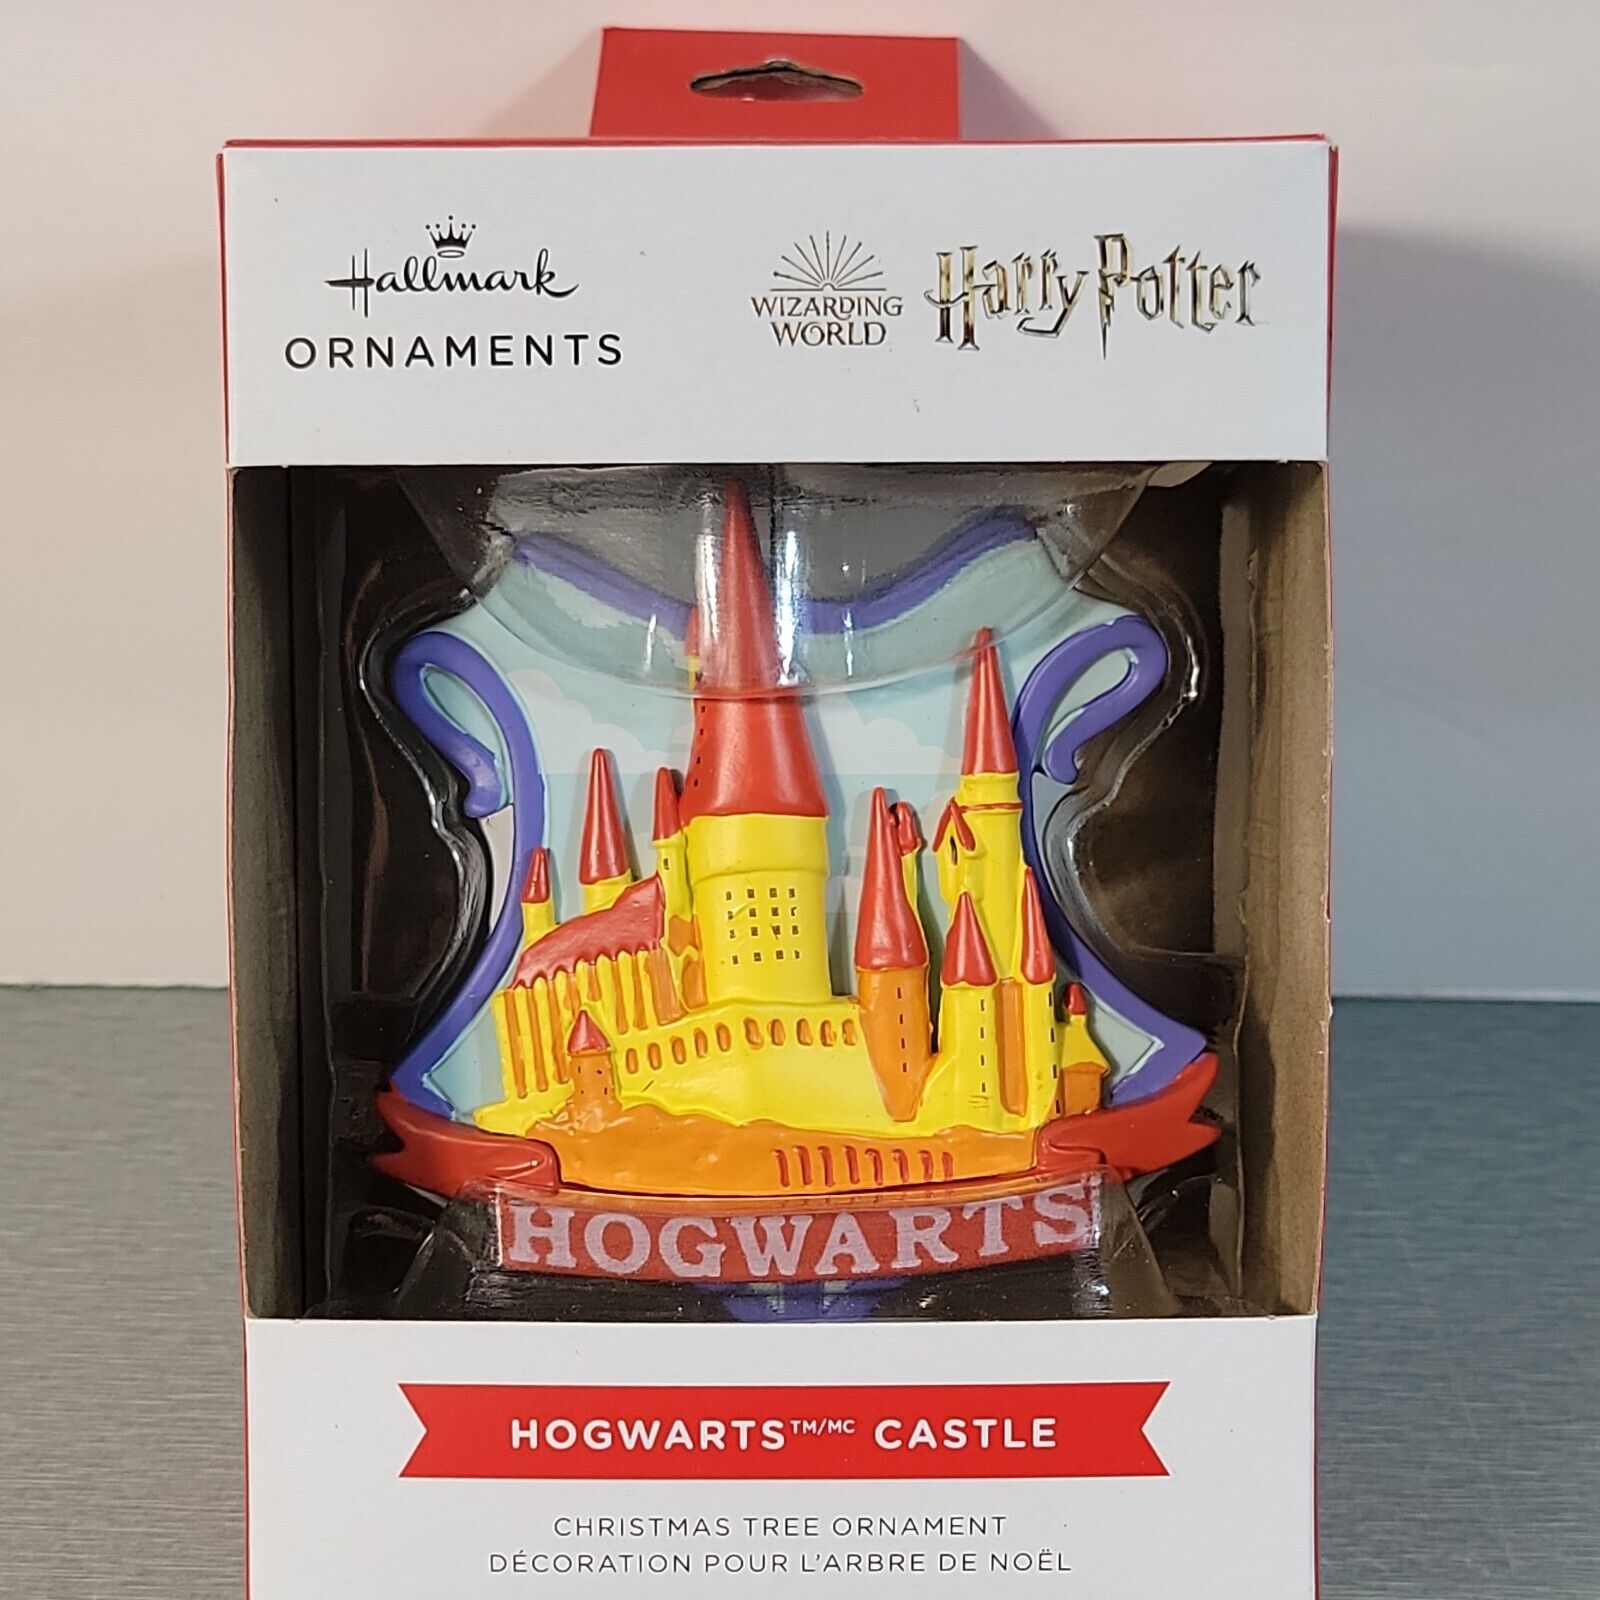 NEW 2021 Hallmark Ornament Hogwarts Castle Harry Potter Wizarding World 